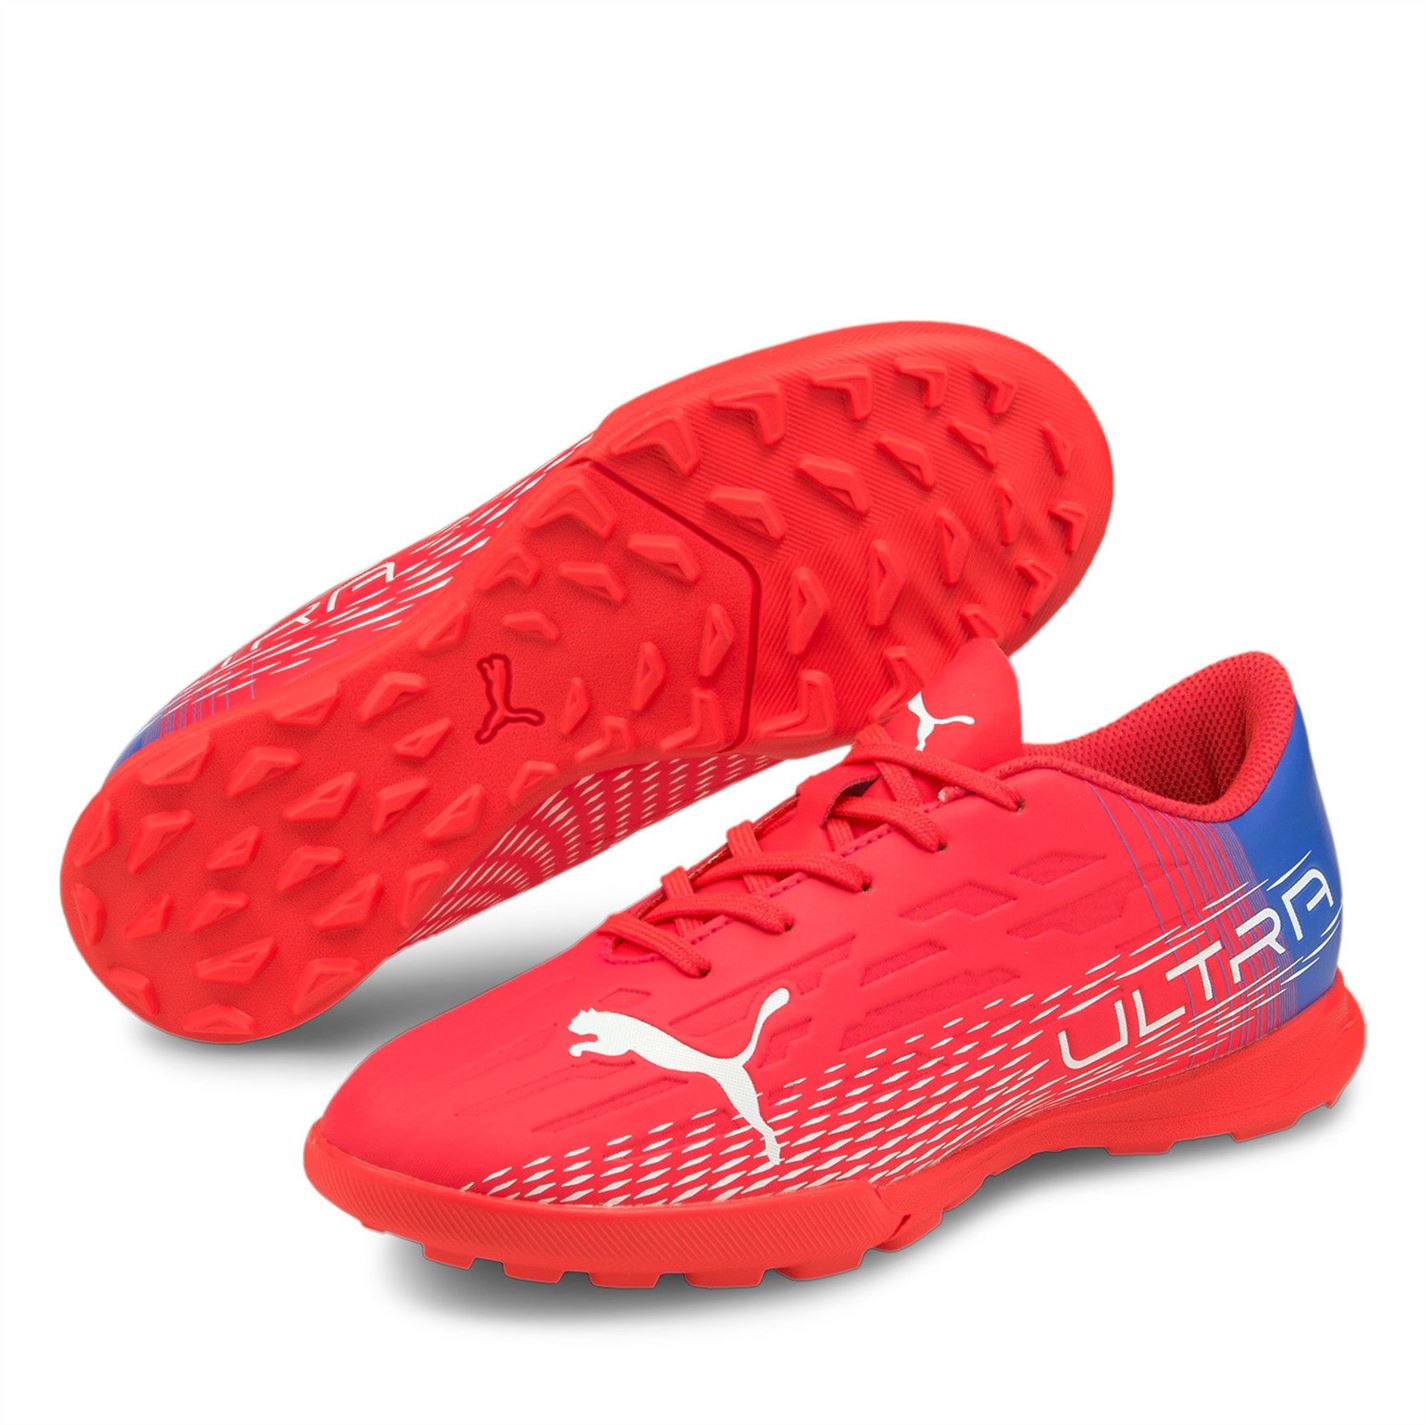 Adidasi Gazon Sintetic Puma Ultra 4.2 pentru Copii rosu albastru